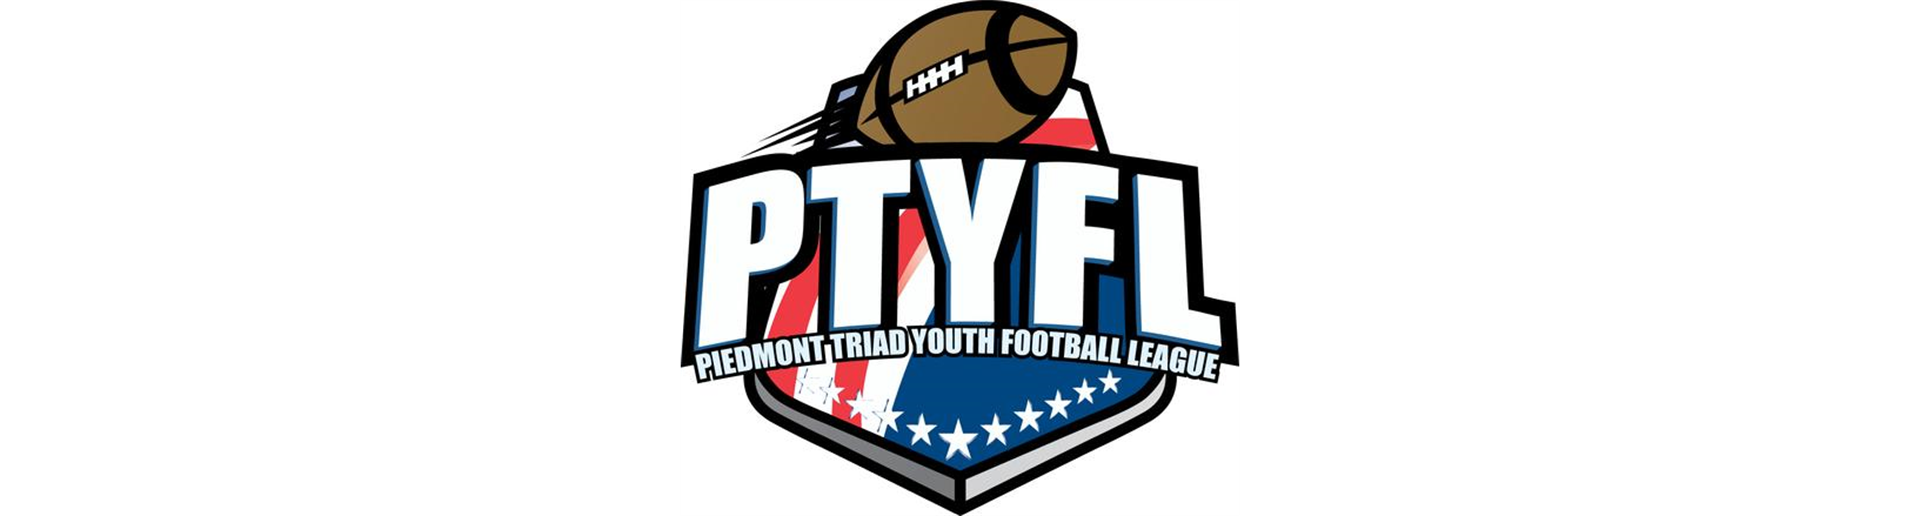 Piedmont Triad Youth Football League